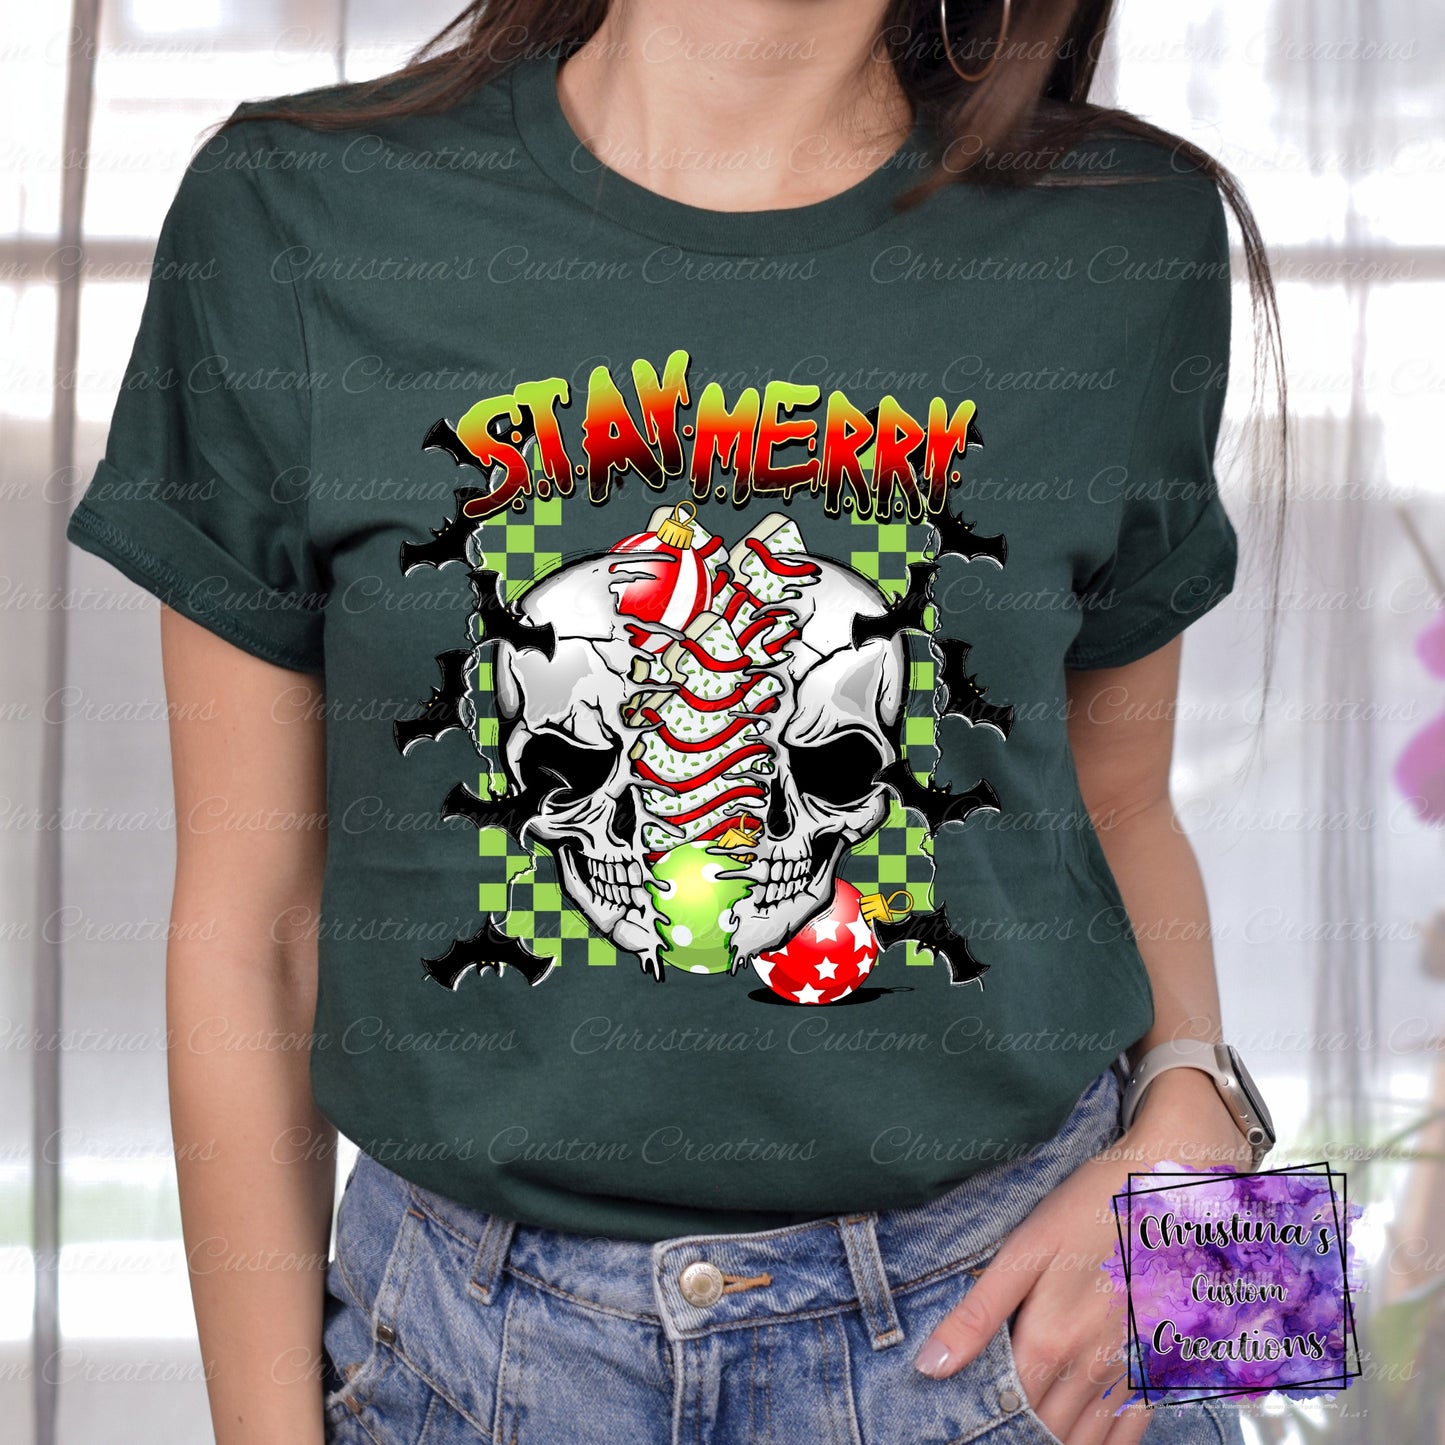 Stay Merry T-Shirt | Halloween/Christmas Shirt | Fast Shipping | Super Soft Shirts for Women/Kid's